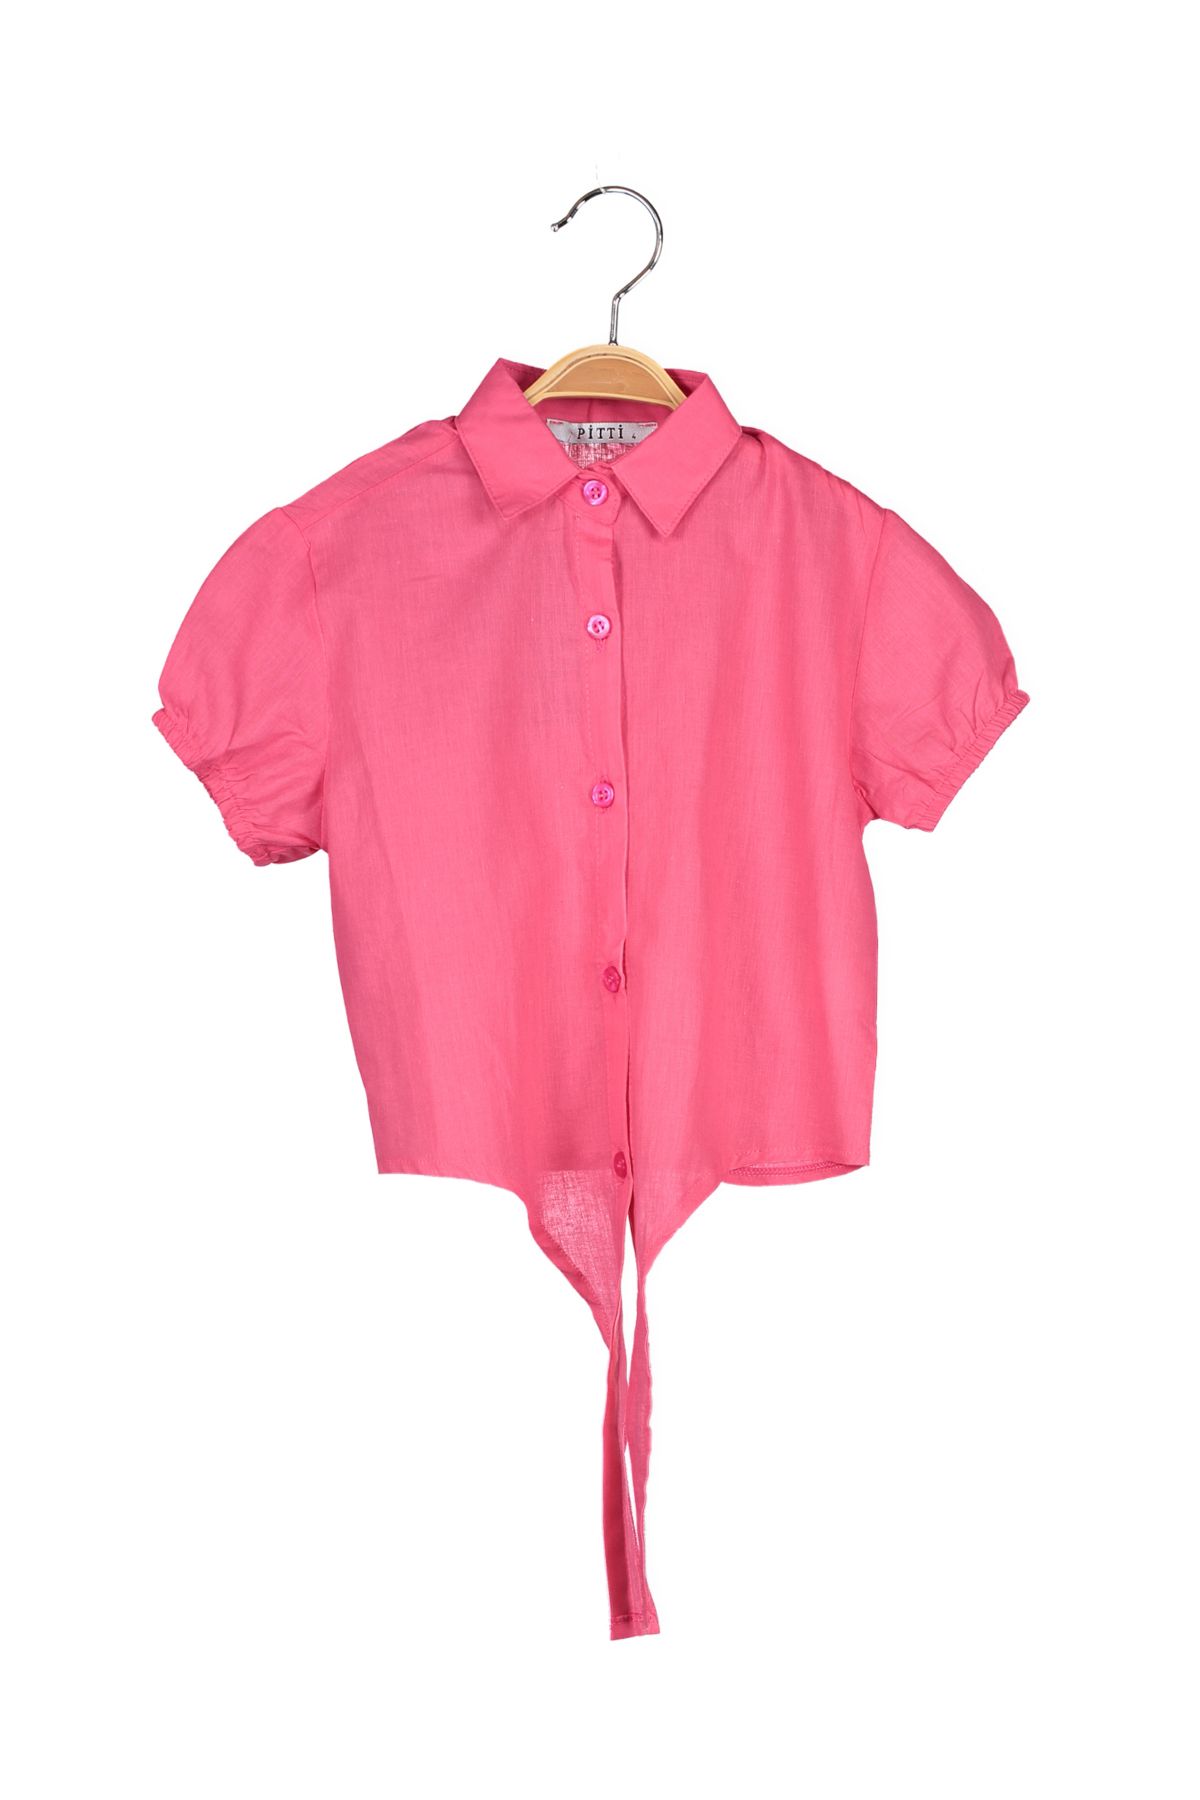 Pitti Kız Çocuk Fuşya Gömlek 91002